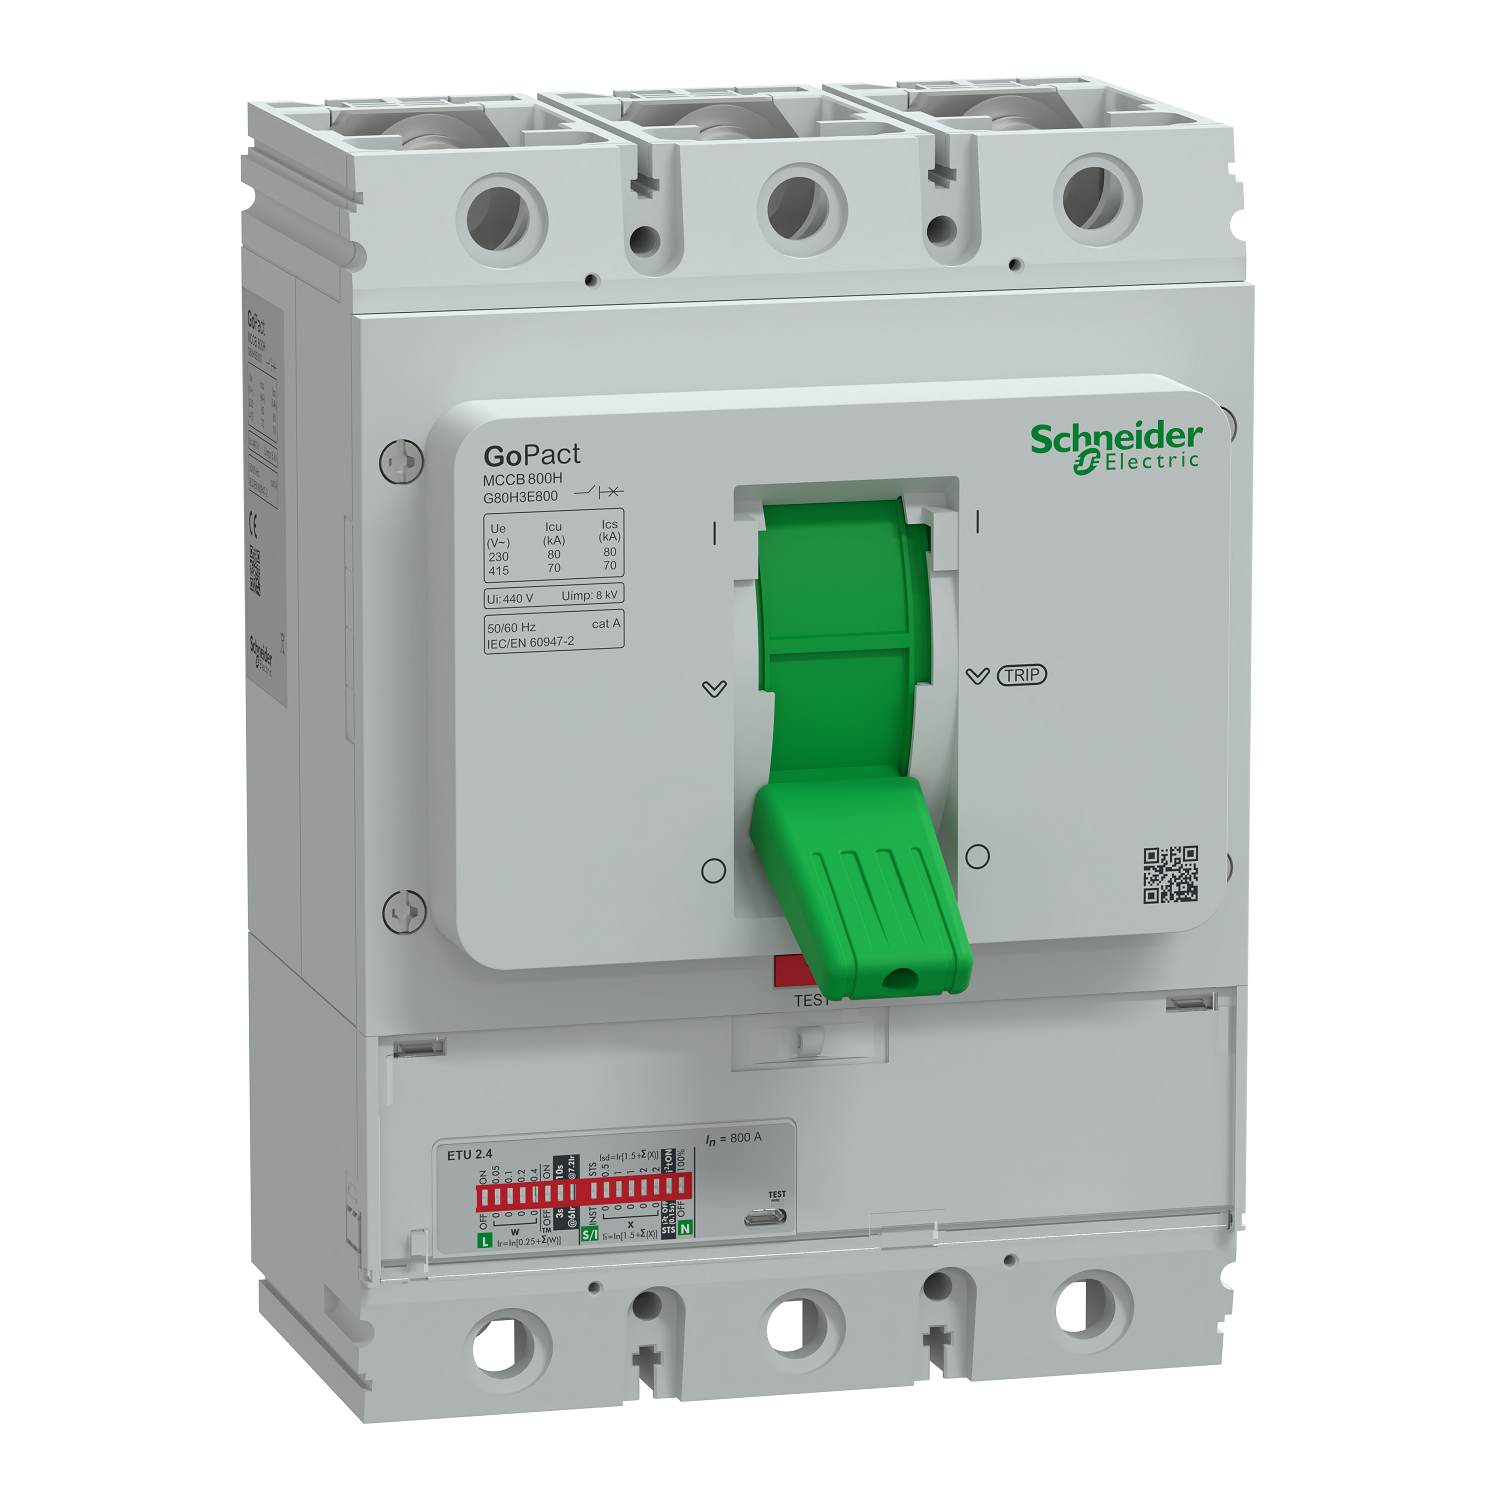 Circuit breaker, GoPact MCCB 800, 3 poles, 70kA at 415VAC, 800A rating, ETU trip unit, adjustable thermal protection